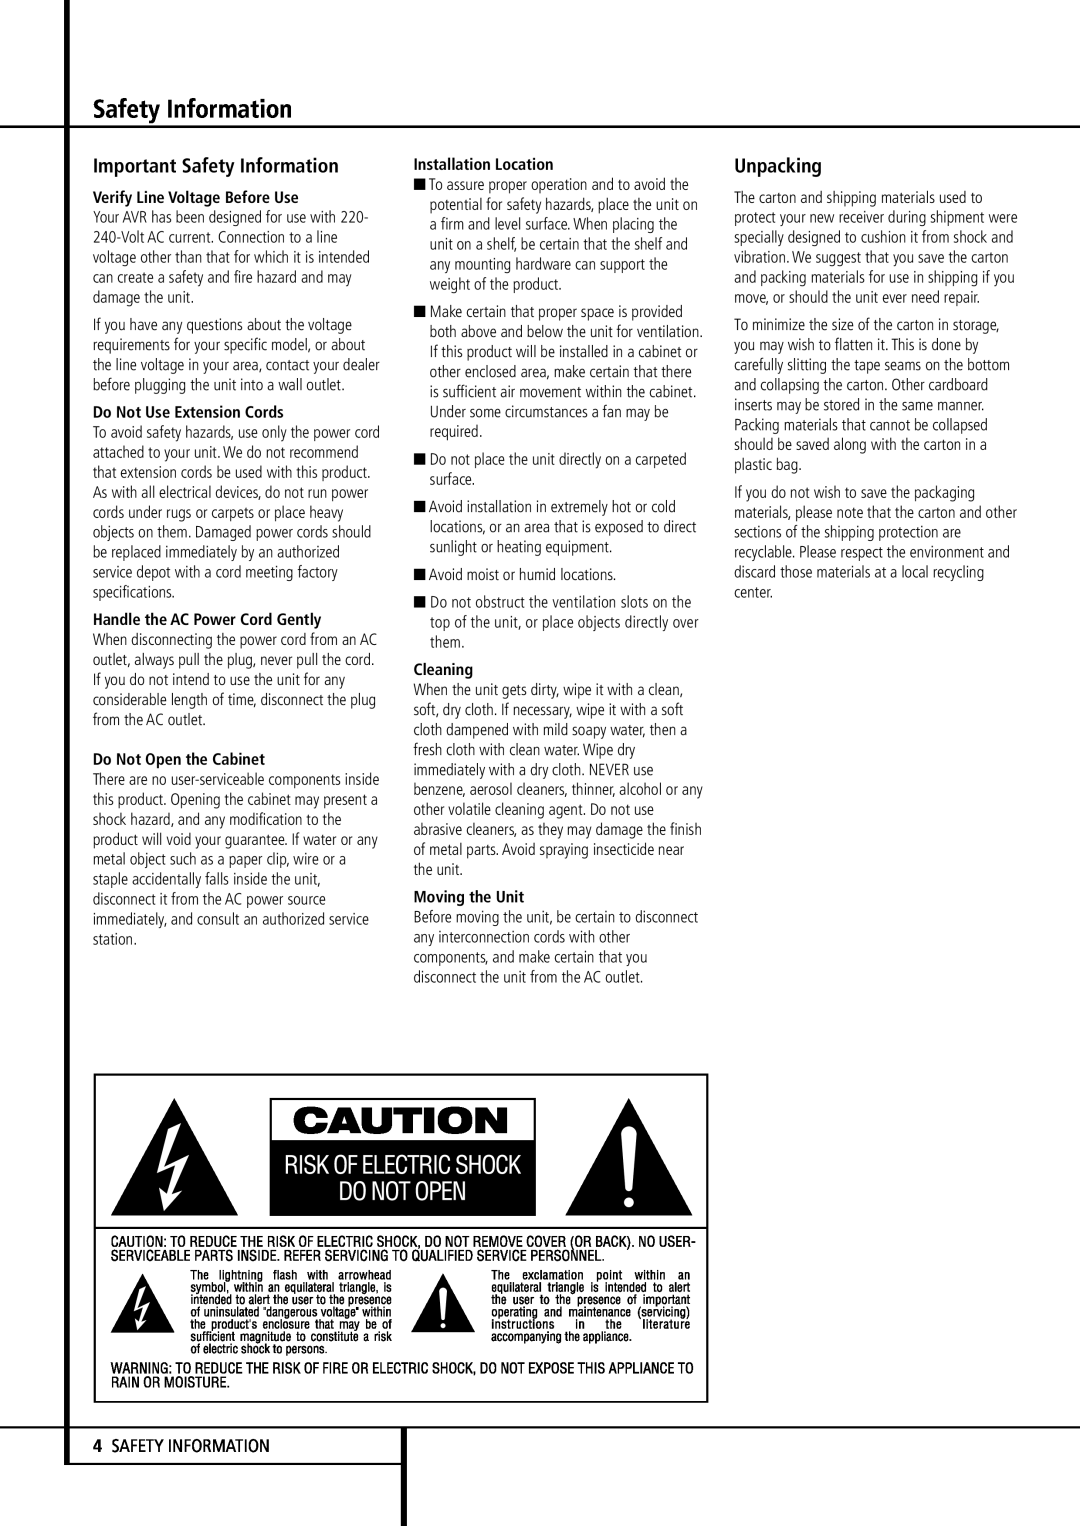 Harman-Kardon AVR507 Important Safety Information, Unpacking, 4SAFETY INFORMATION, Verify Line Voltage Before Use 